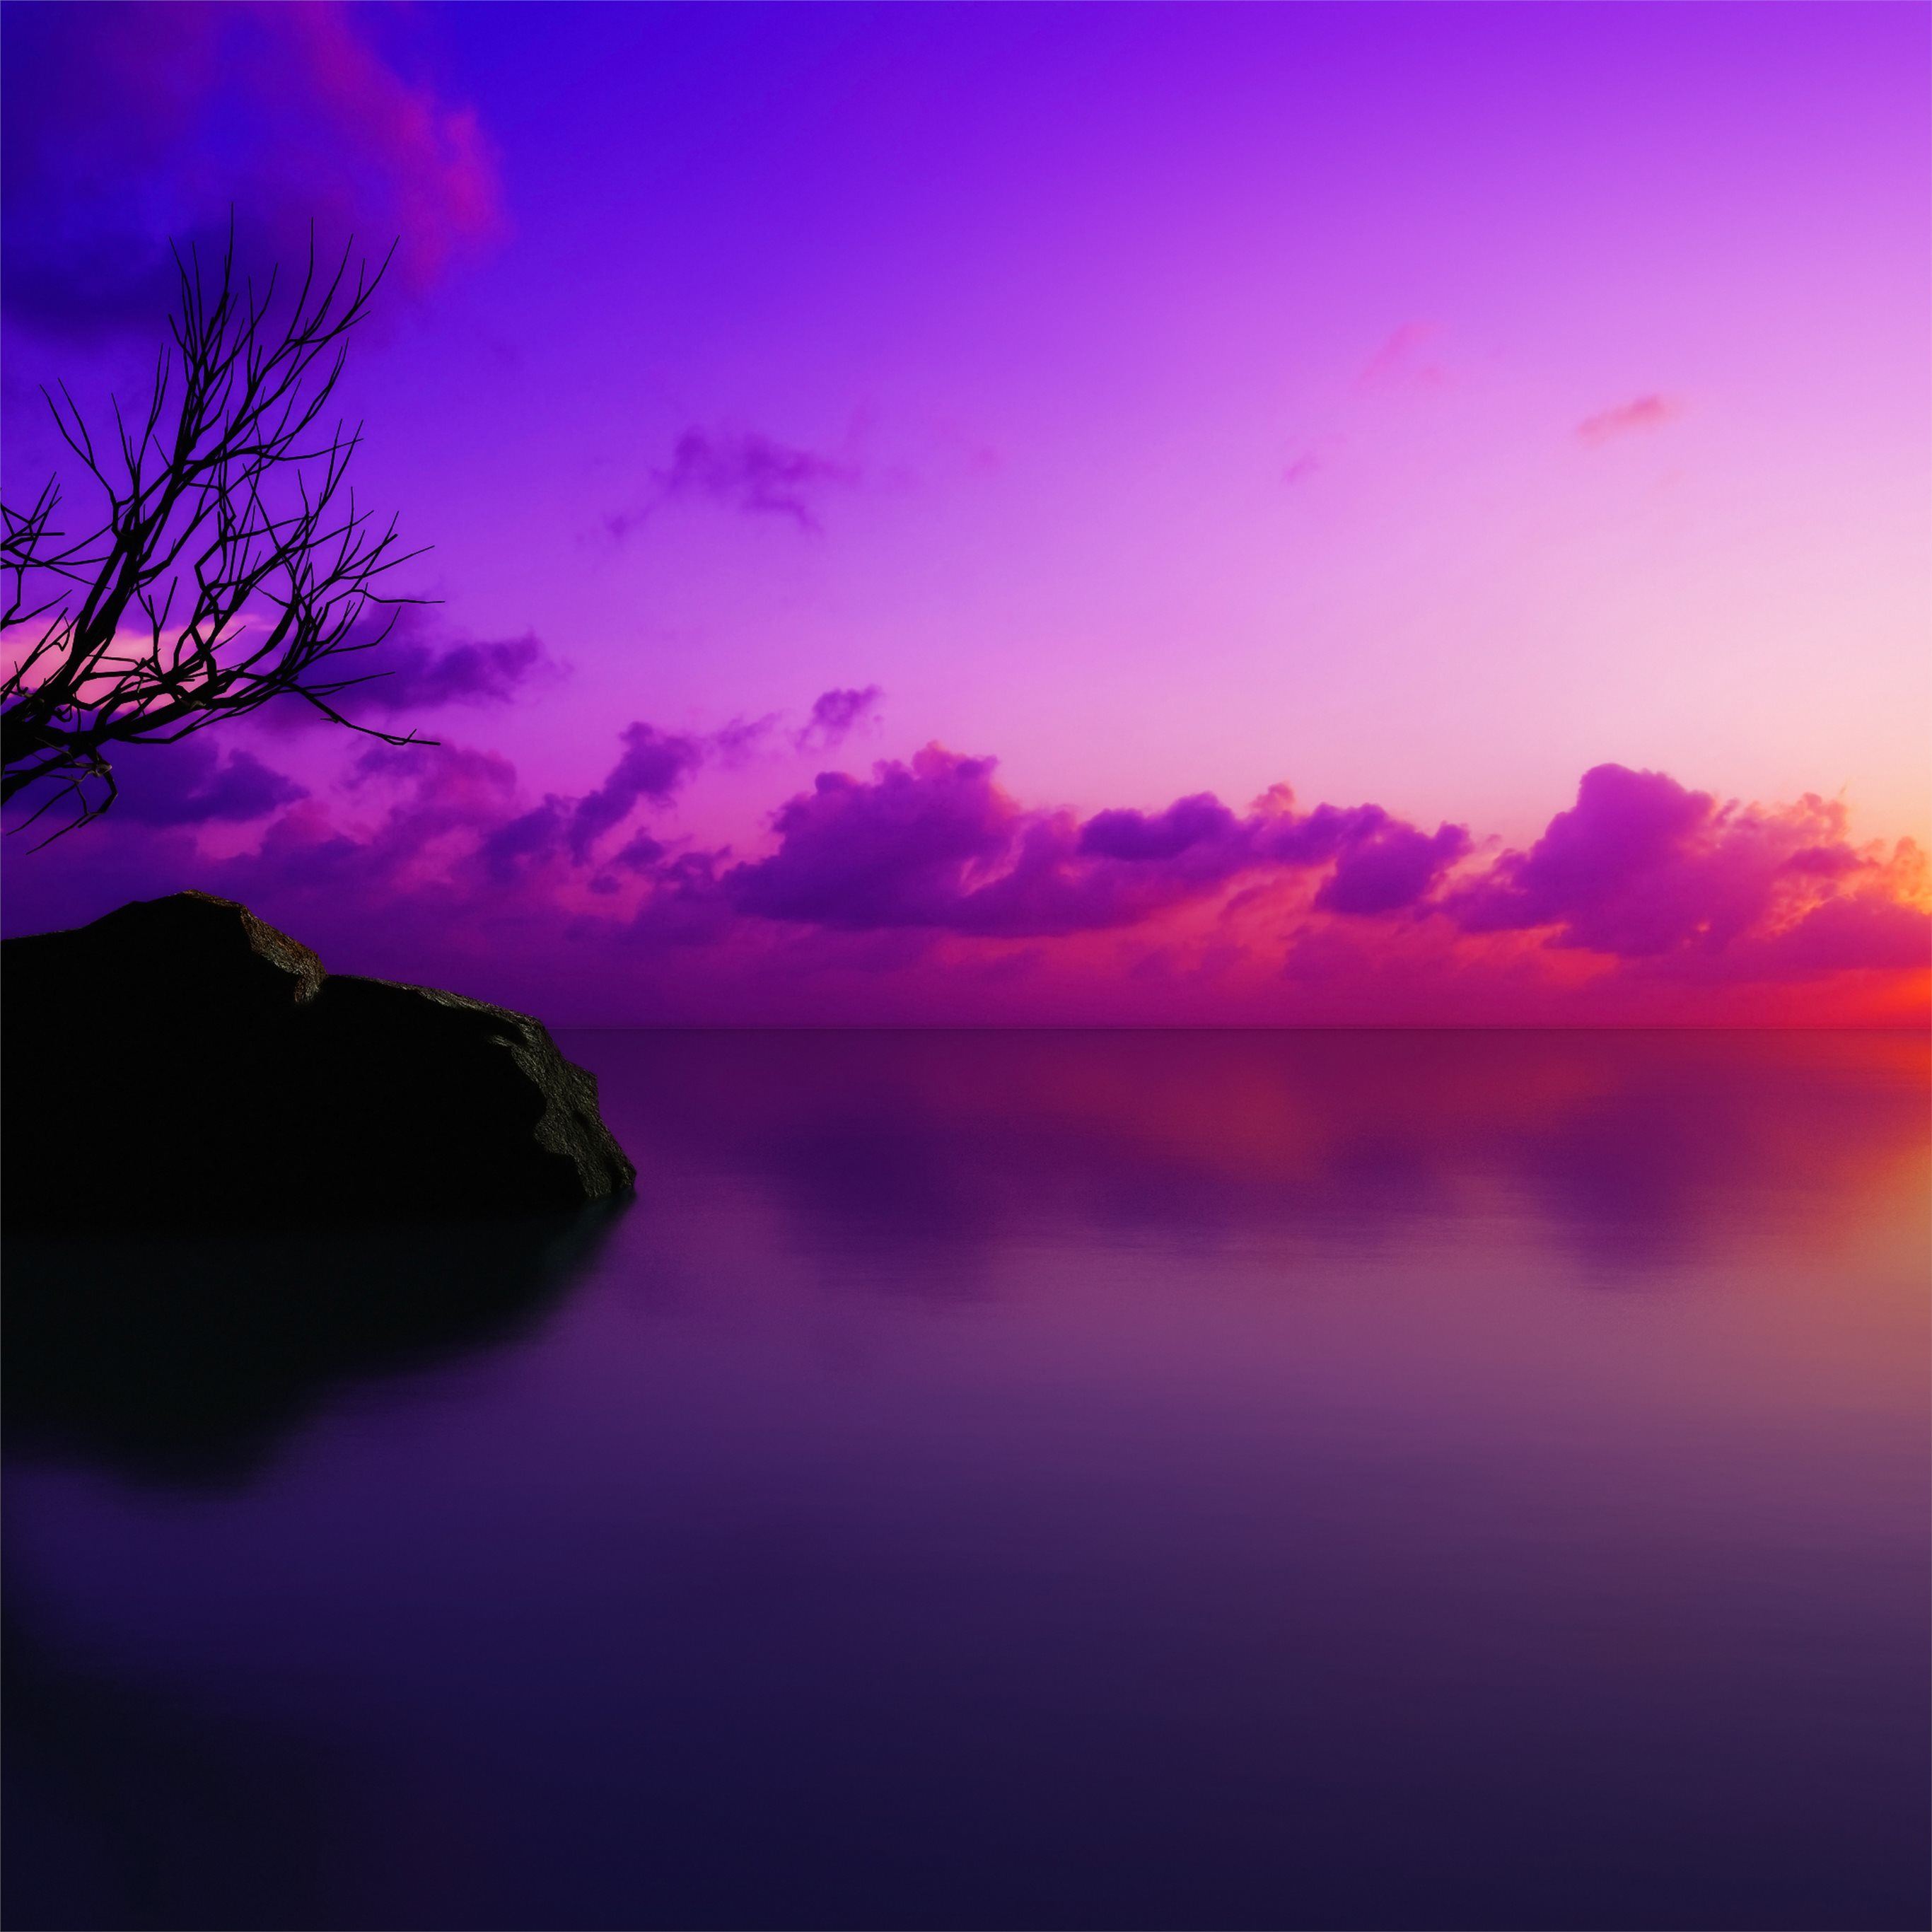 maldivian sunset 4k iPad Pro Wallpapers Free Download